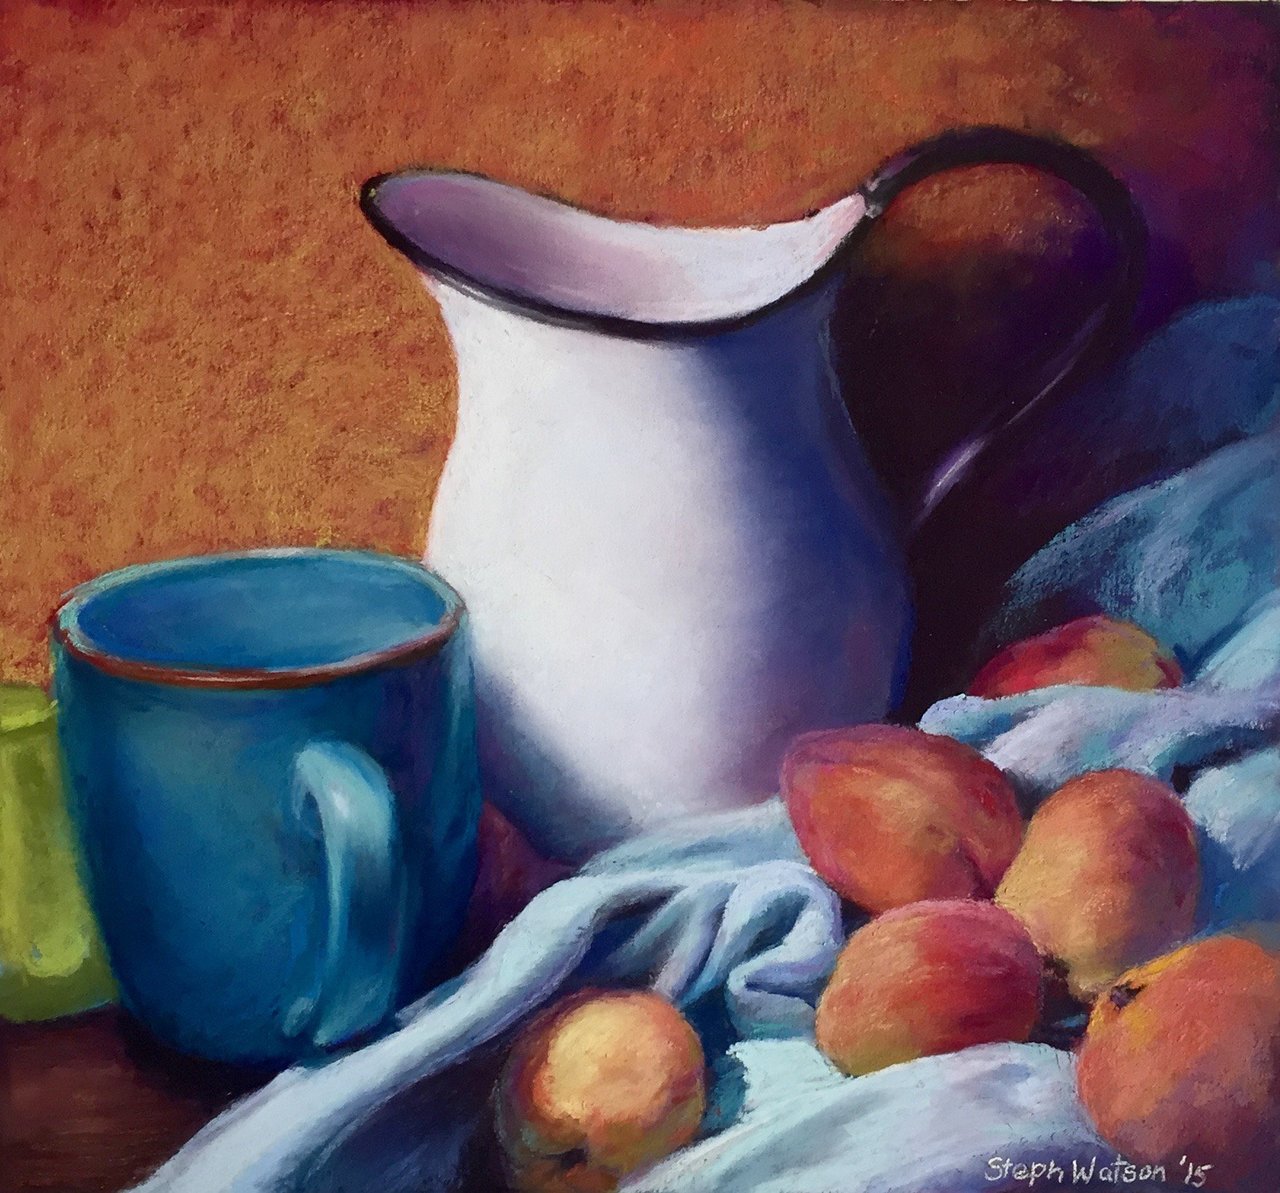 RT @Pastelistaz: https://www.etsy.com/listing/239607769/white-pitcher-with-peaches-original?ref=shop_home_active_66 #art #fineart #homedecor #painting #stilllife #originalart https://t.co/s7TAbxtAh8